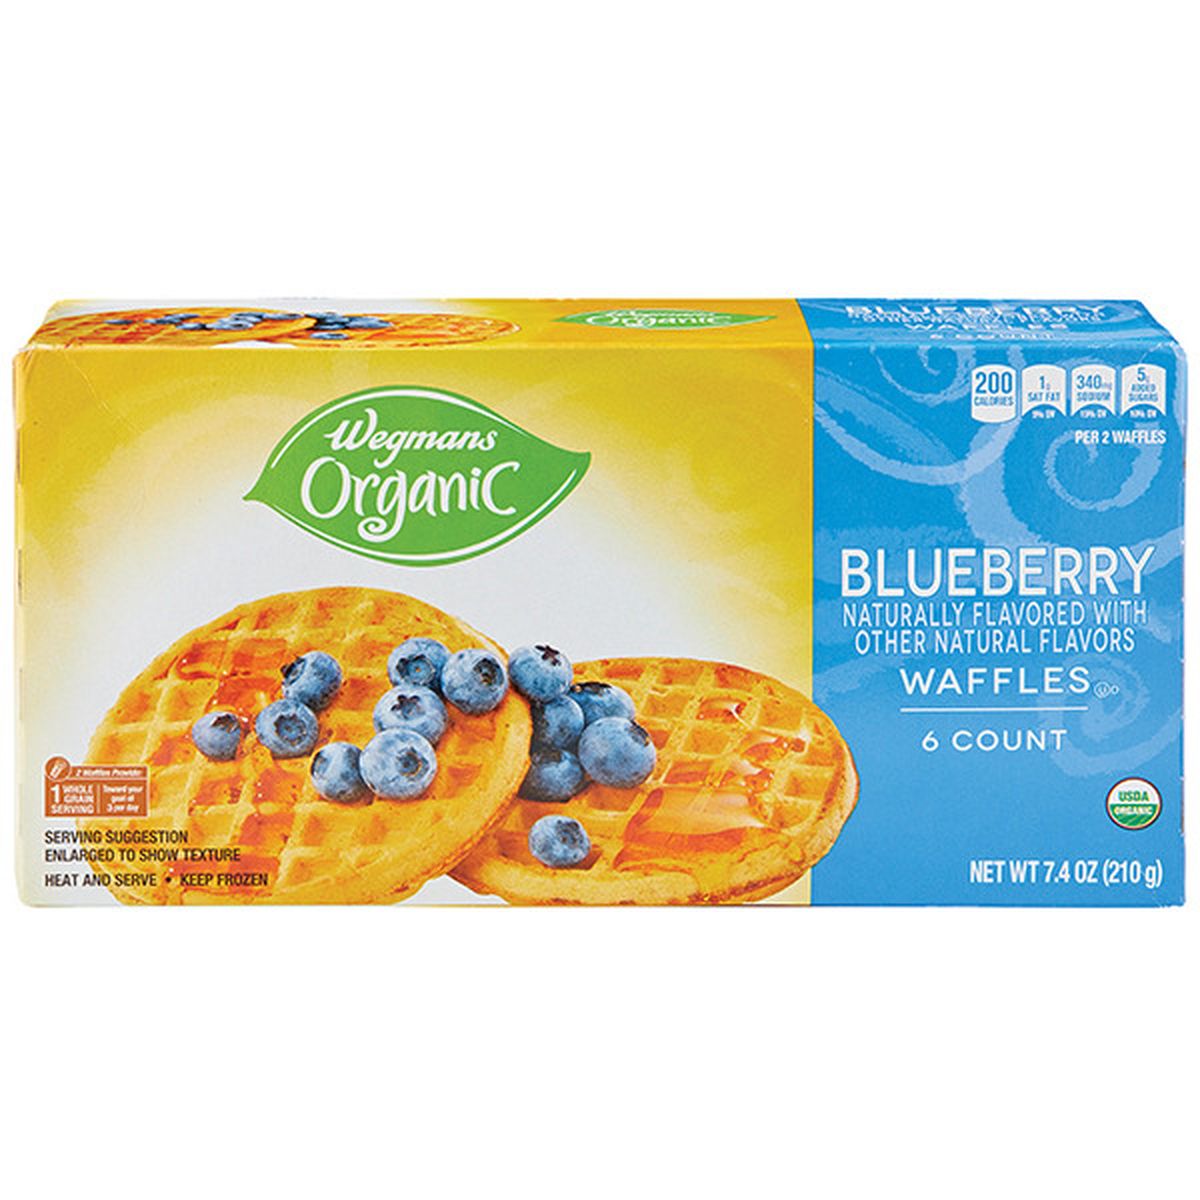 Calories in Wegmans Organic Blueberry Waffles, 6 Count